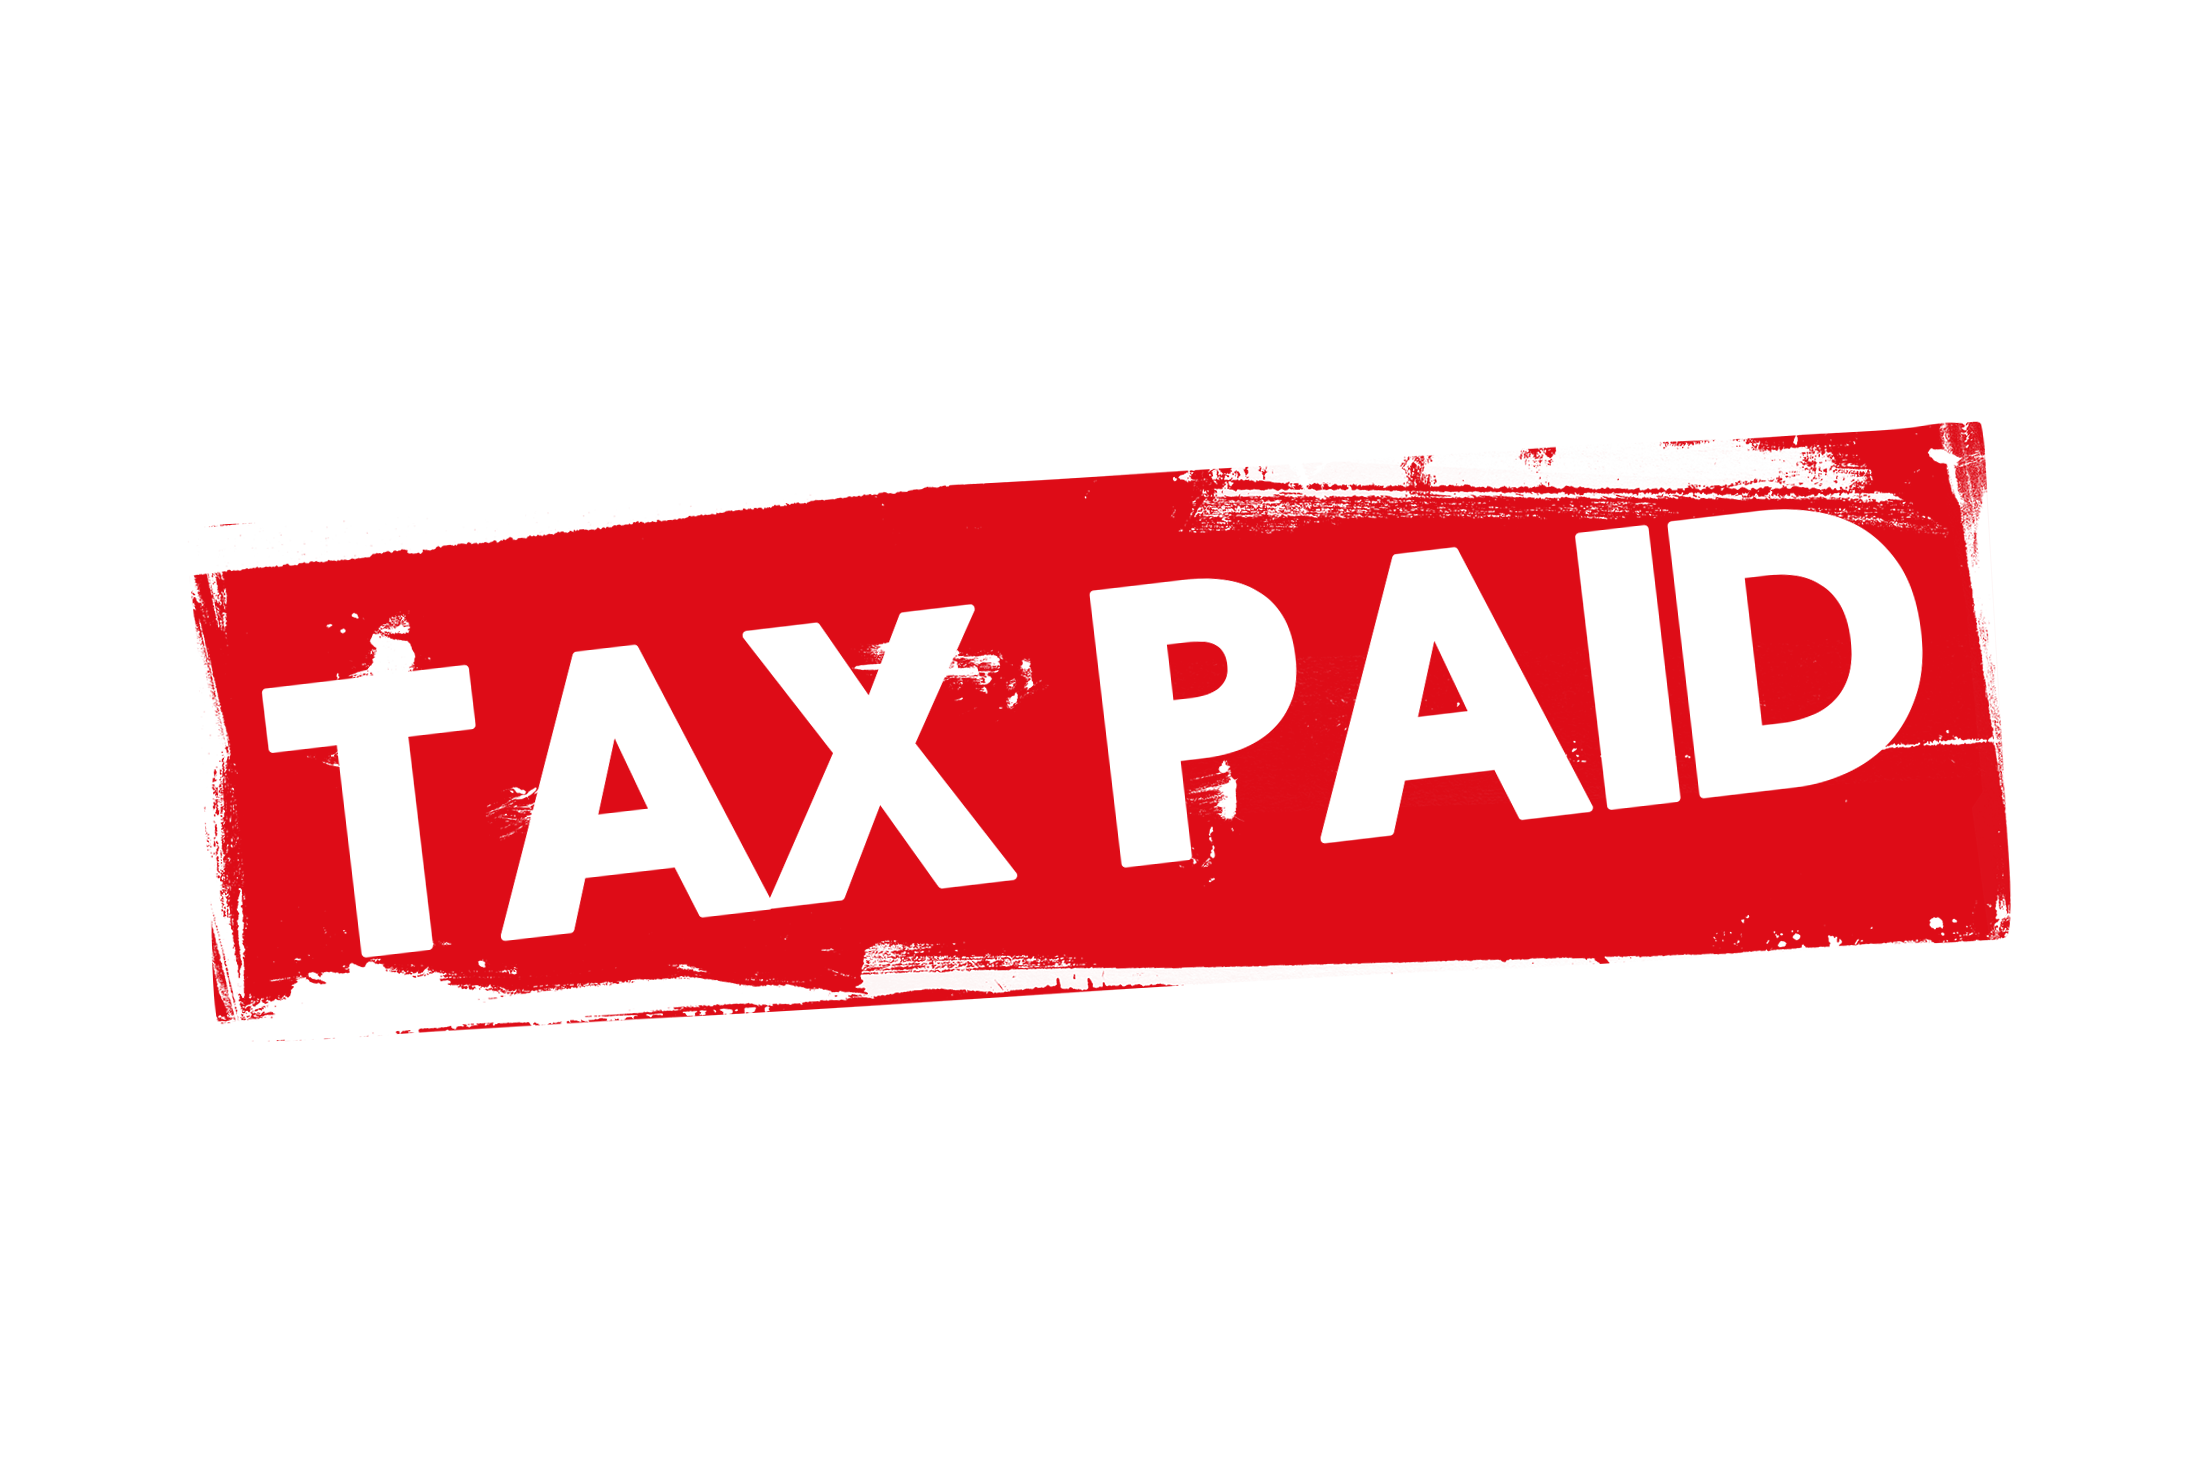 Grunge tax paid label PSD